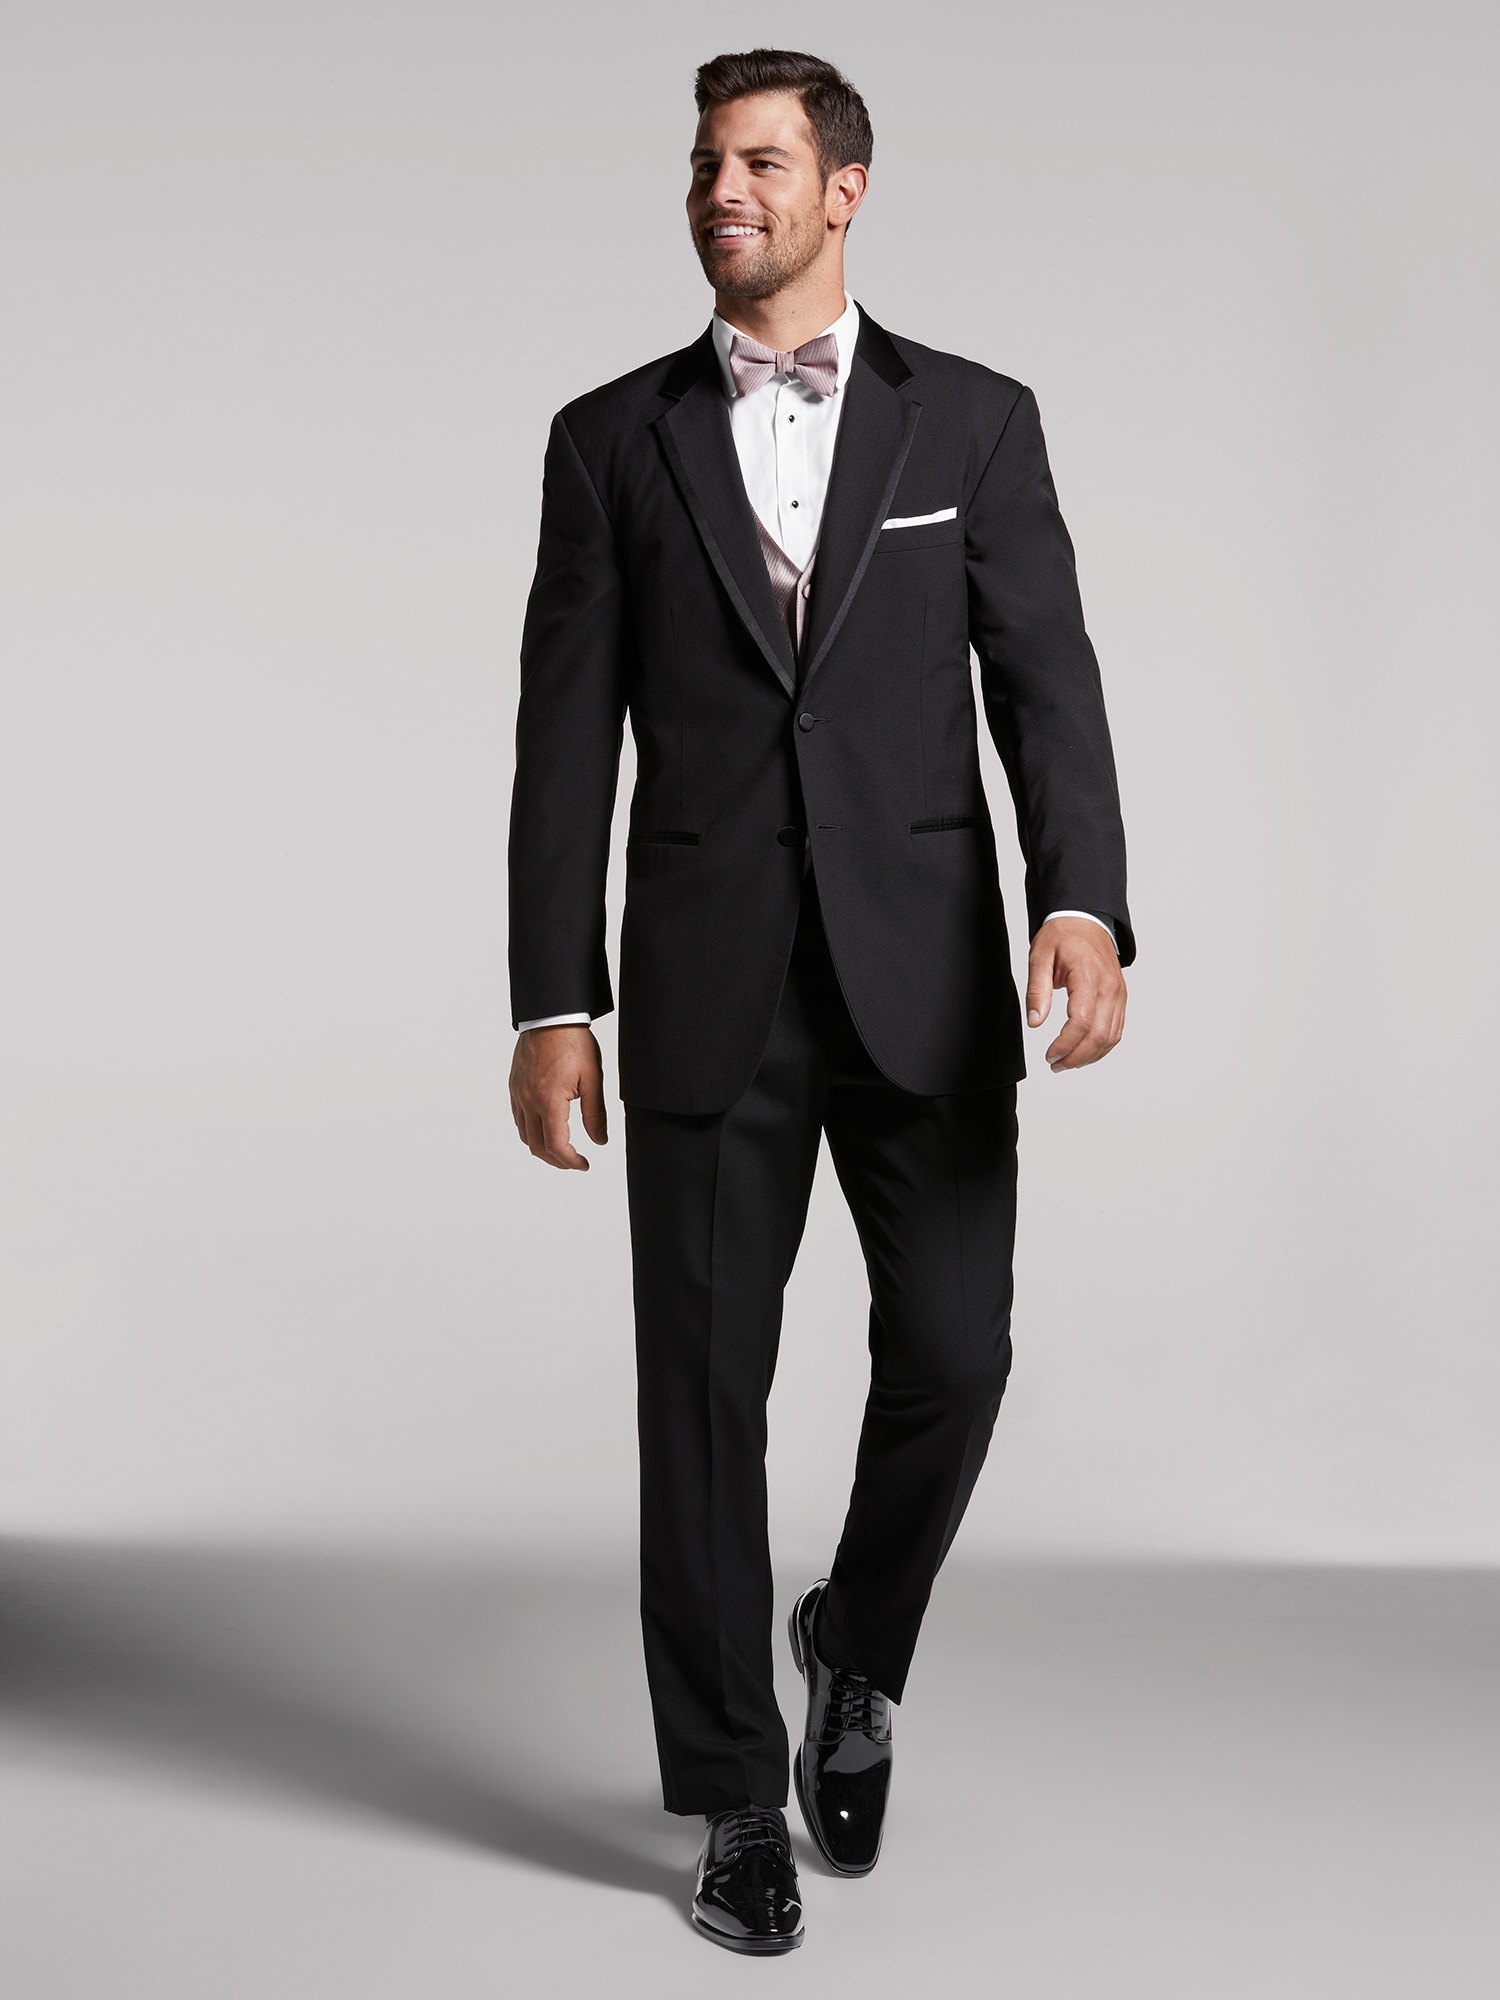 Men 2 Piece Suit Black Tuxedo Suit Perfect for Wedding One Button Suits,  Tuxedo Suits, Dinner Suits, Wedding Groom Suits, Bespoke for Men -   Canada